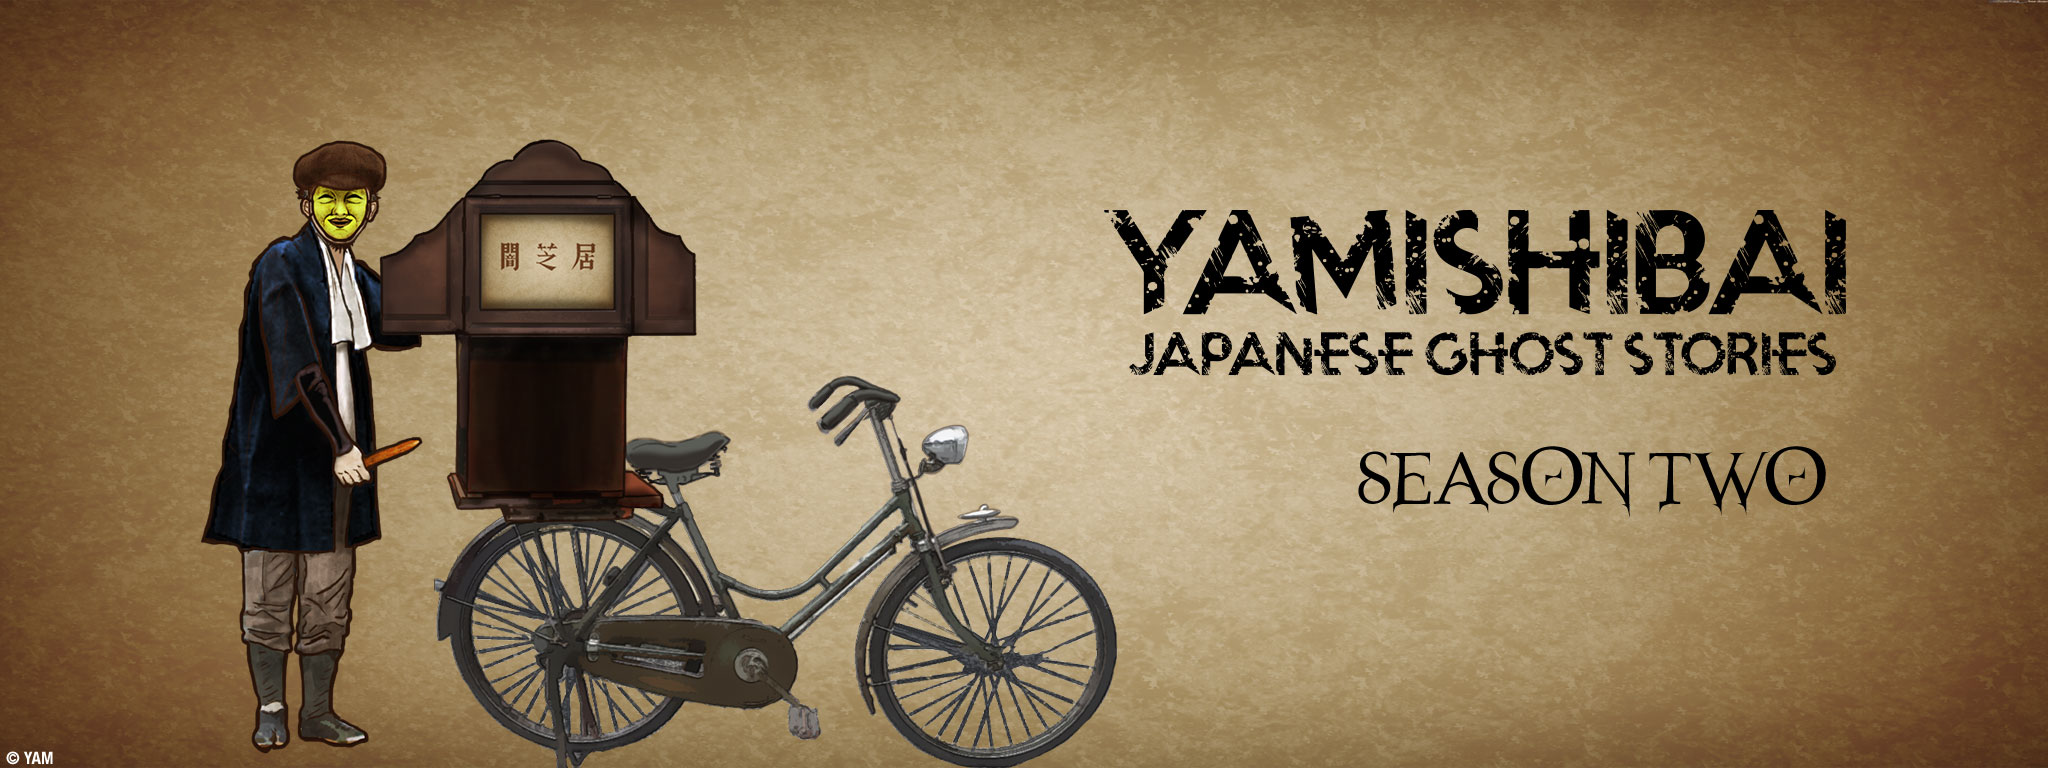 Title Art for Yamishibai: Japanese Ghost Stories Season 2